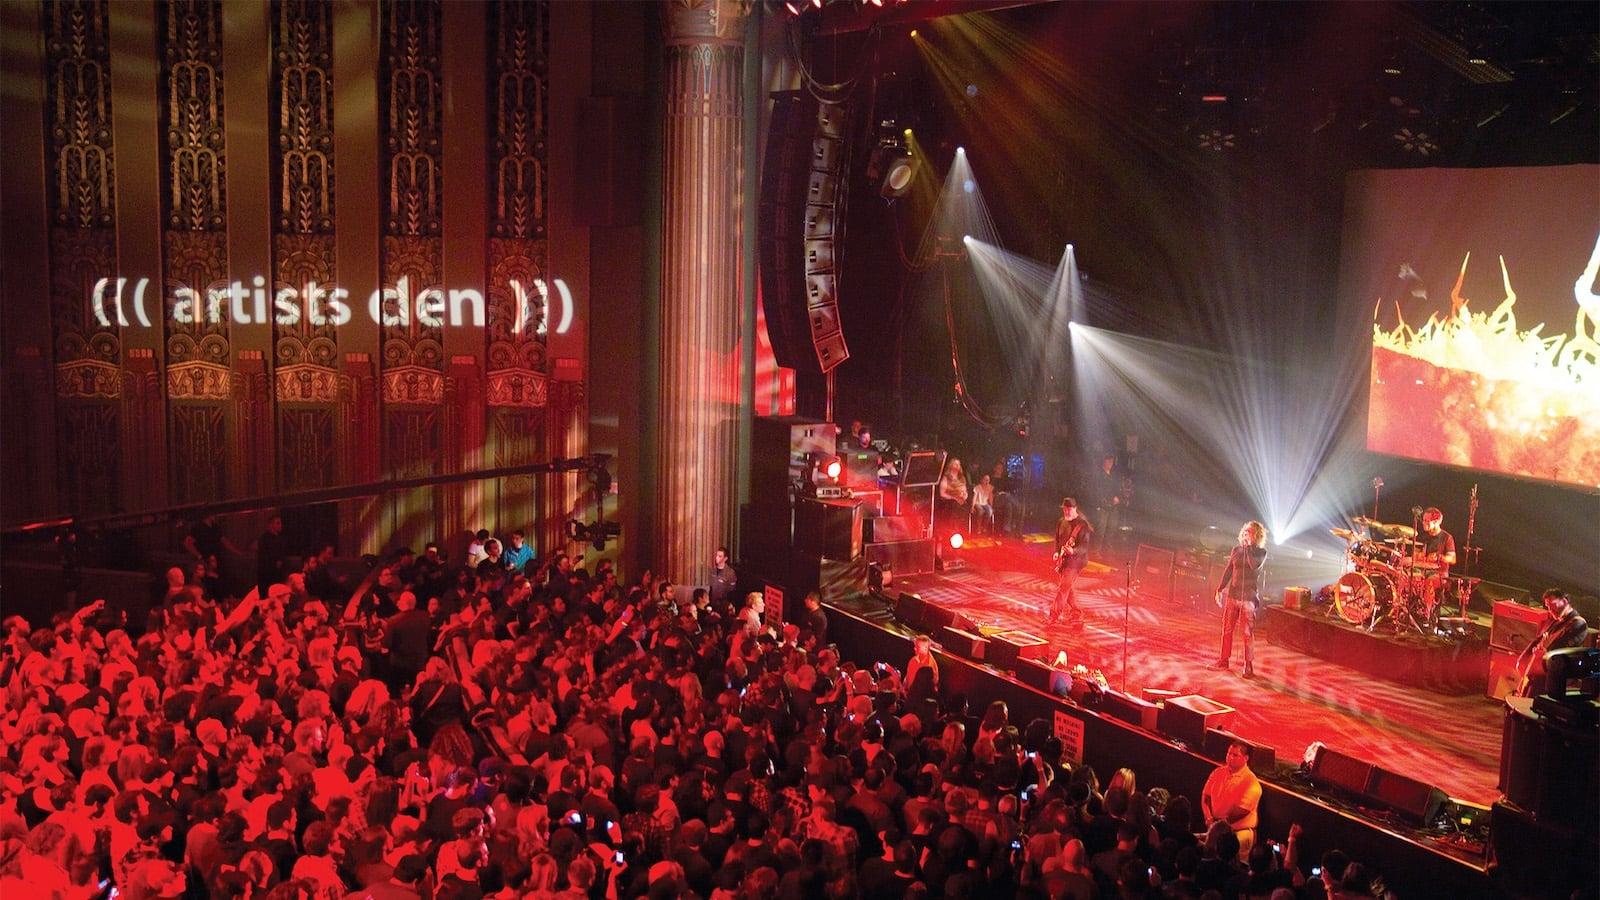 Soundgarden: Live From The Artists Den backdrop